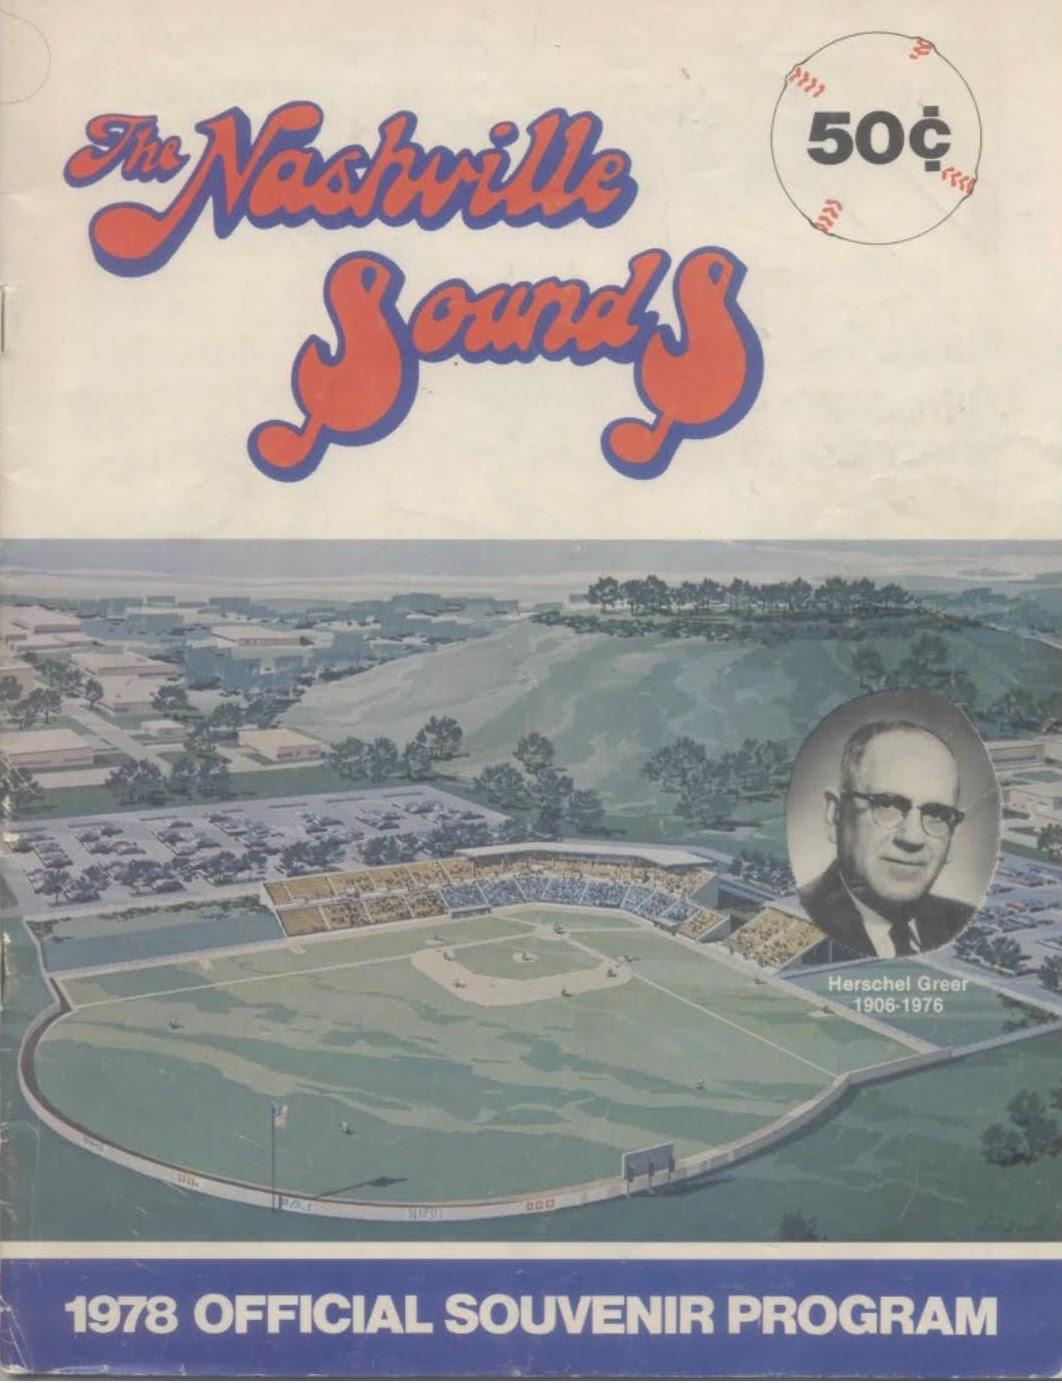 Nashville Sounds 1978 Official Souvenir Program showing the historic Herschel Greer Stadium